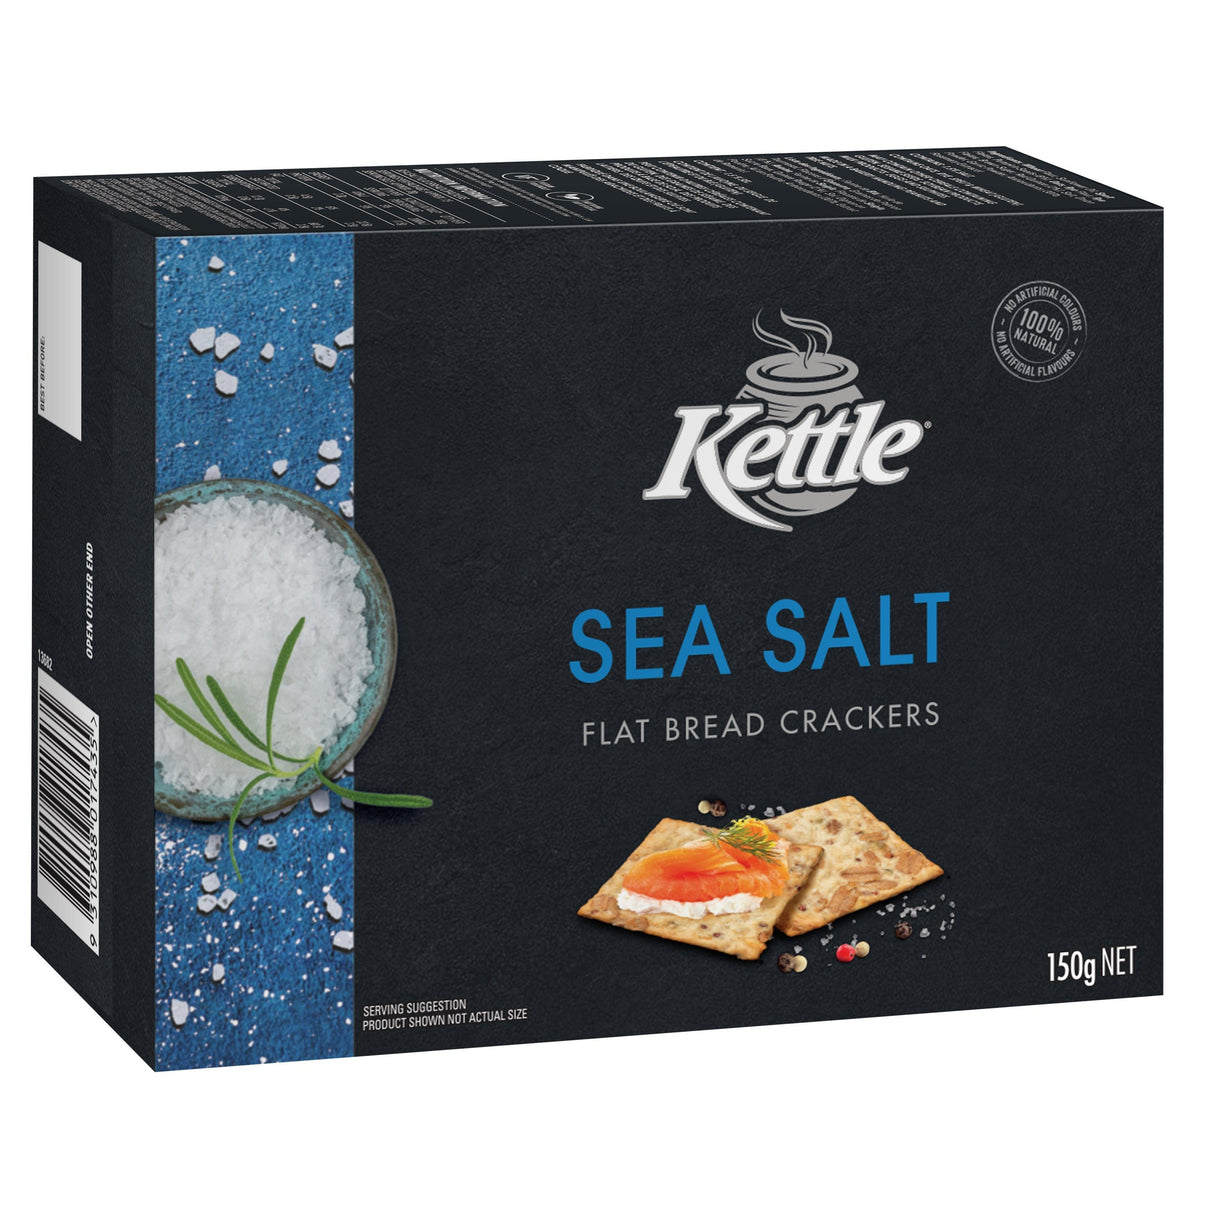 Kettle Sea Salt Flat Bread Crackers 150g